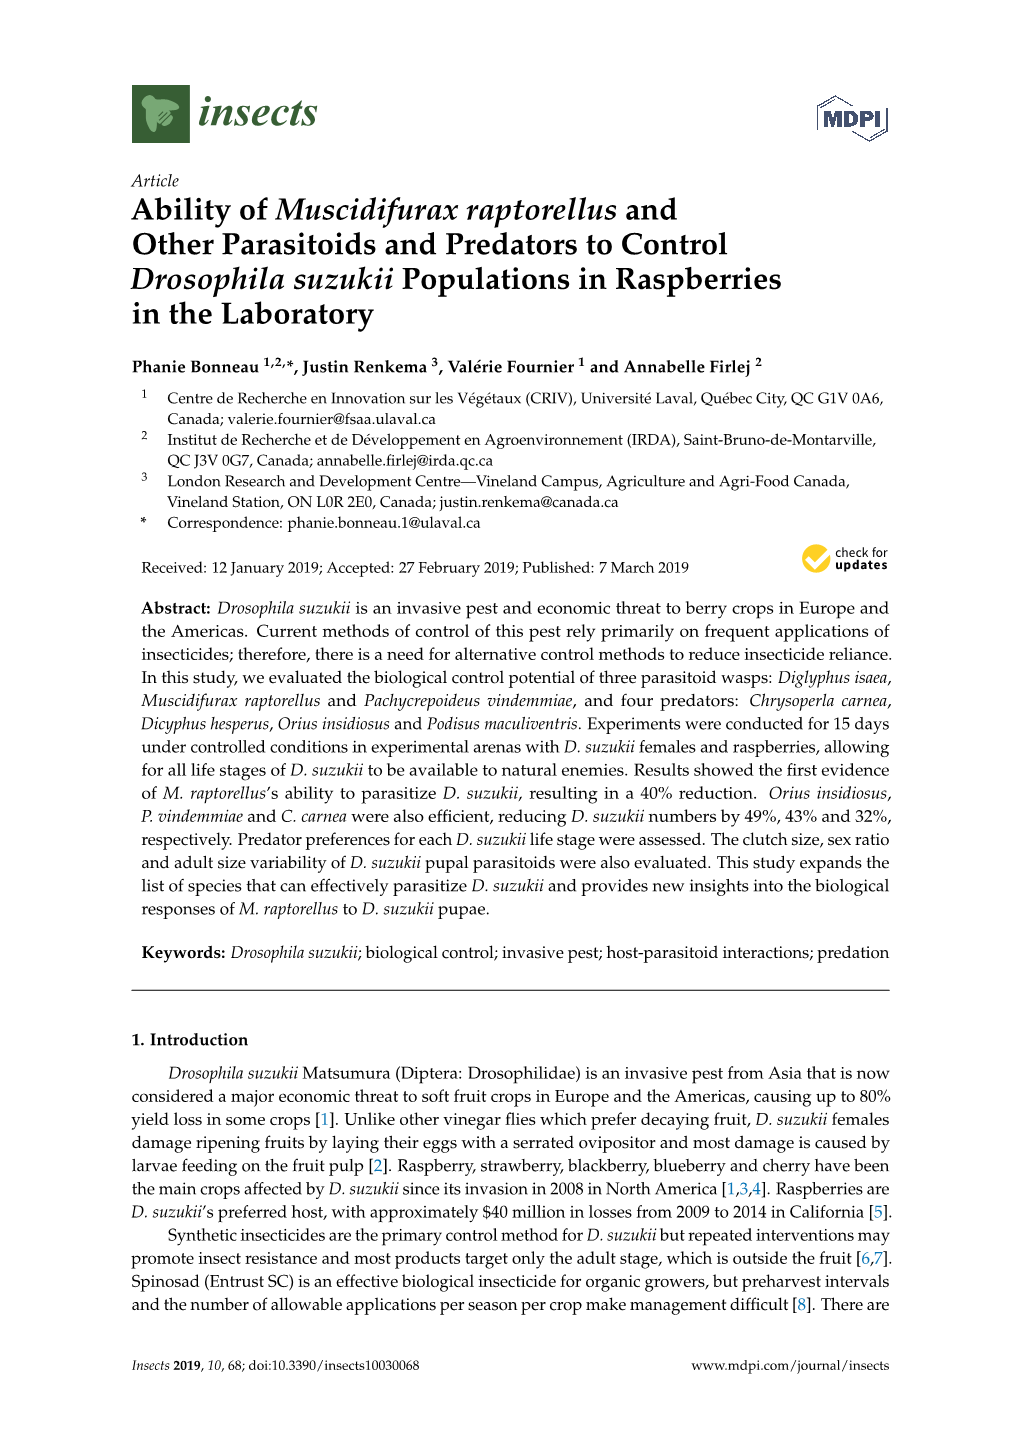 Ability of Muscidifurax Raptorellus and Other Parasitoids and Predators to Control Drosophila Suzukii Populations in Raspberries in the Laboratory